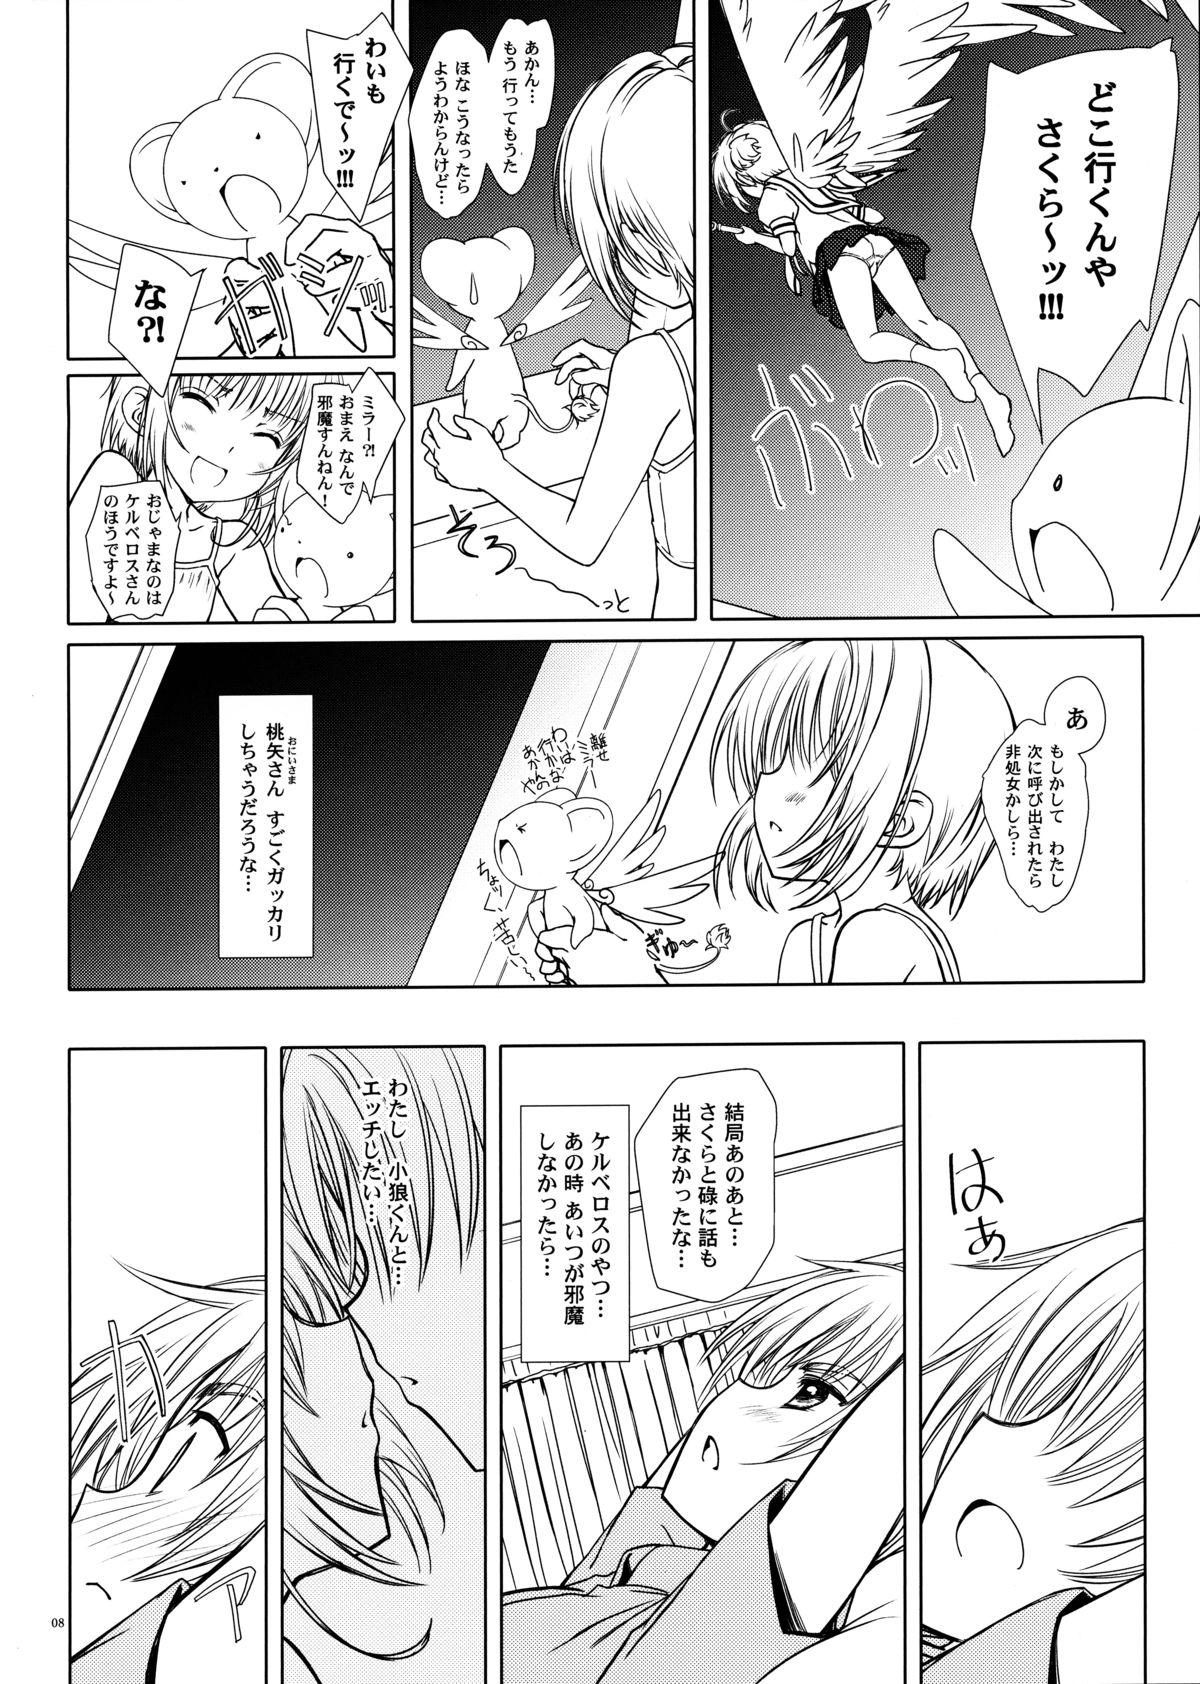 Sextoy Magic of Love - Cardcaptor sakura Web - Page 7